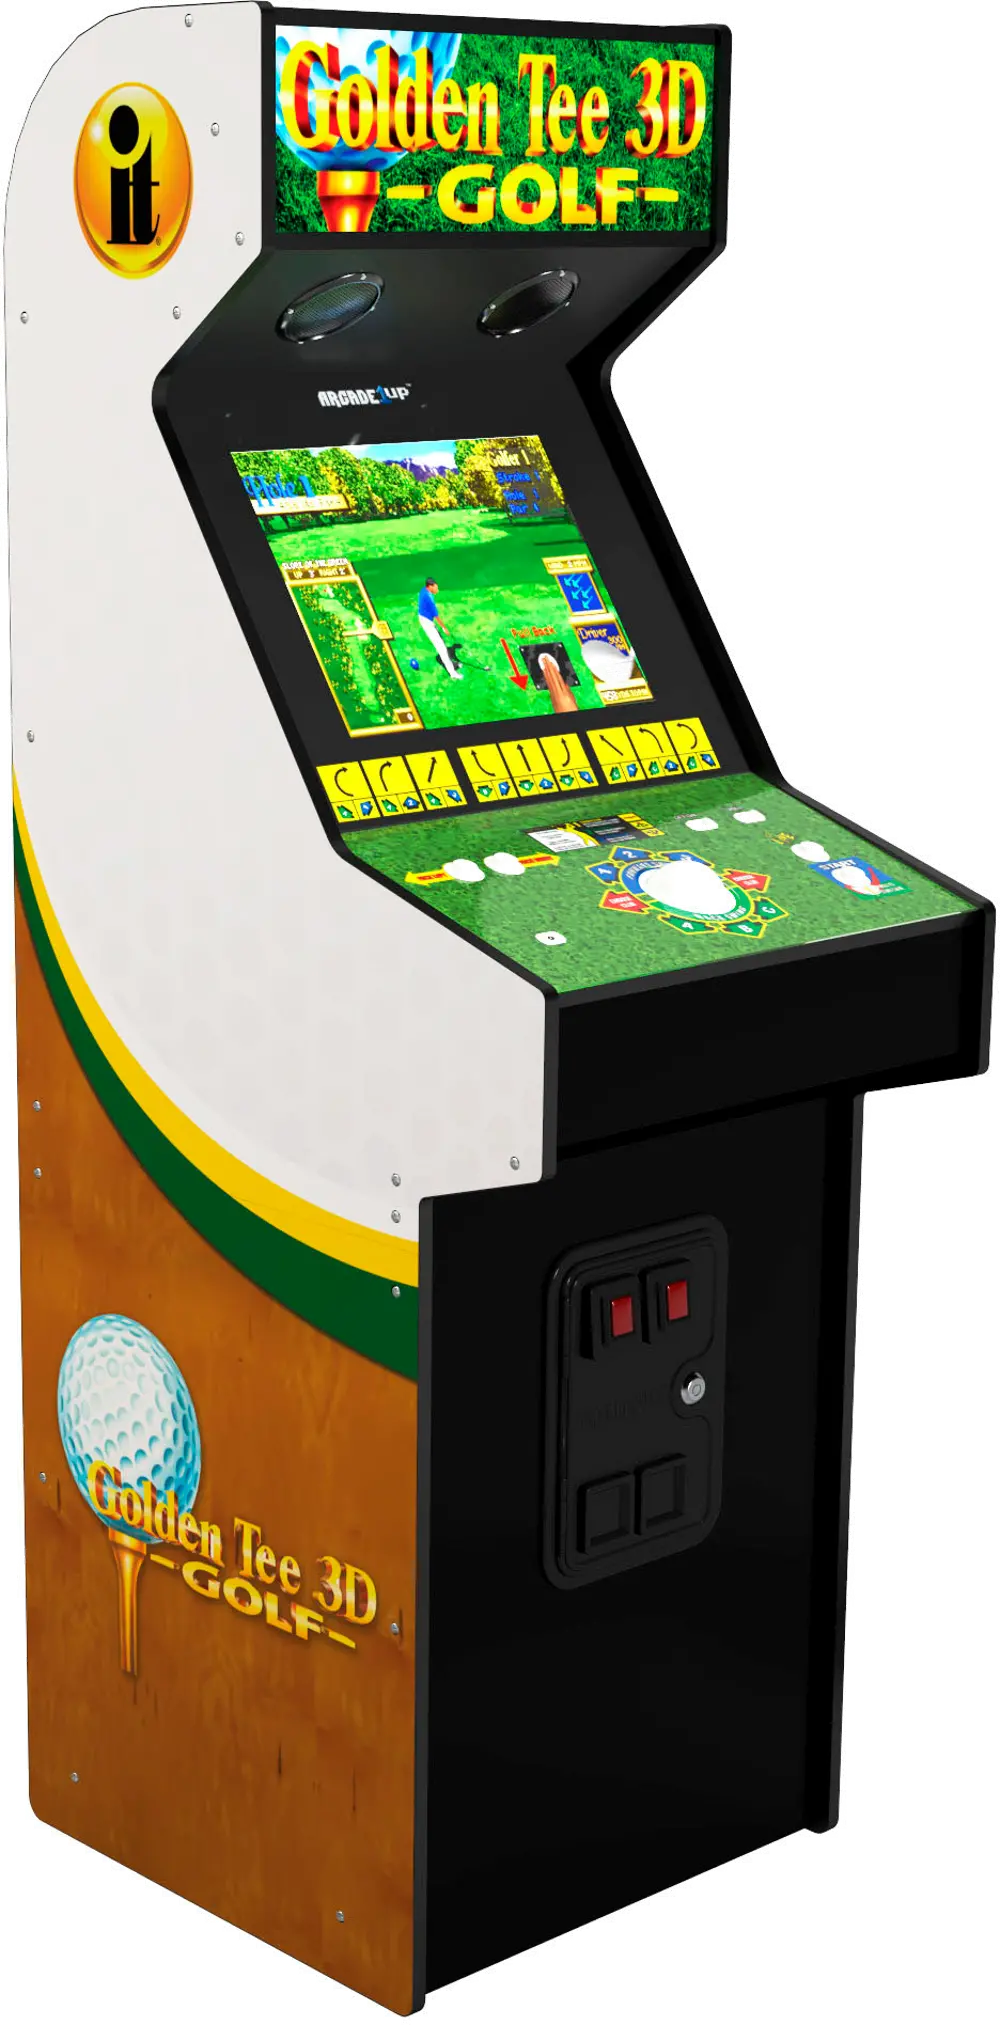 UPRIGHT/GOLDN_TEE_19 Arcade1Up Golden Tee 3D Golf 19  Arcade with Lit Marque-1